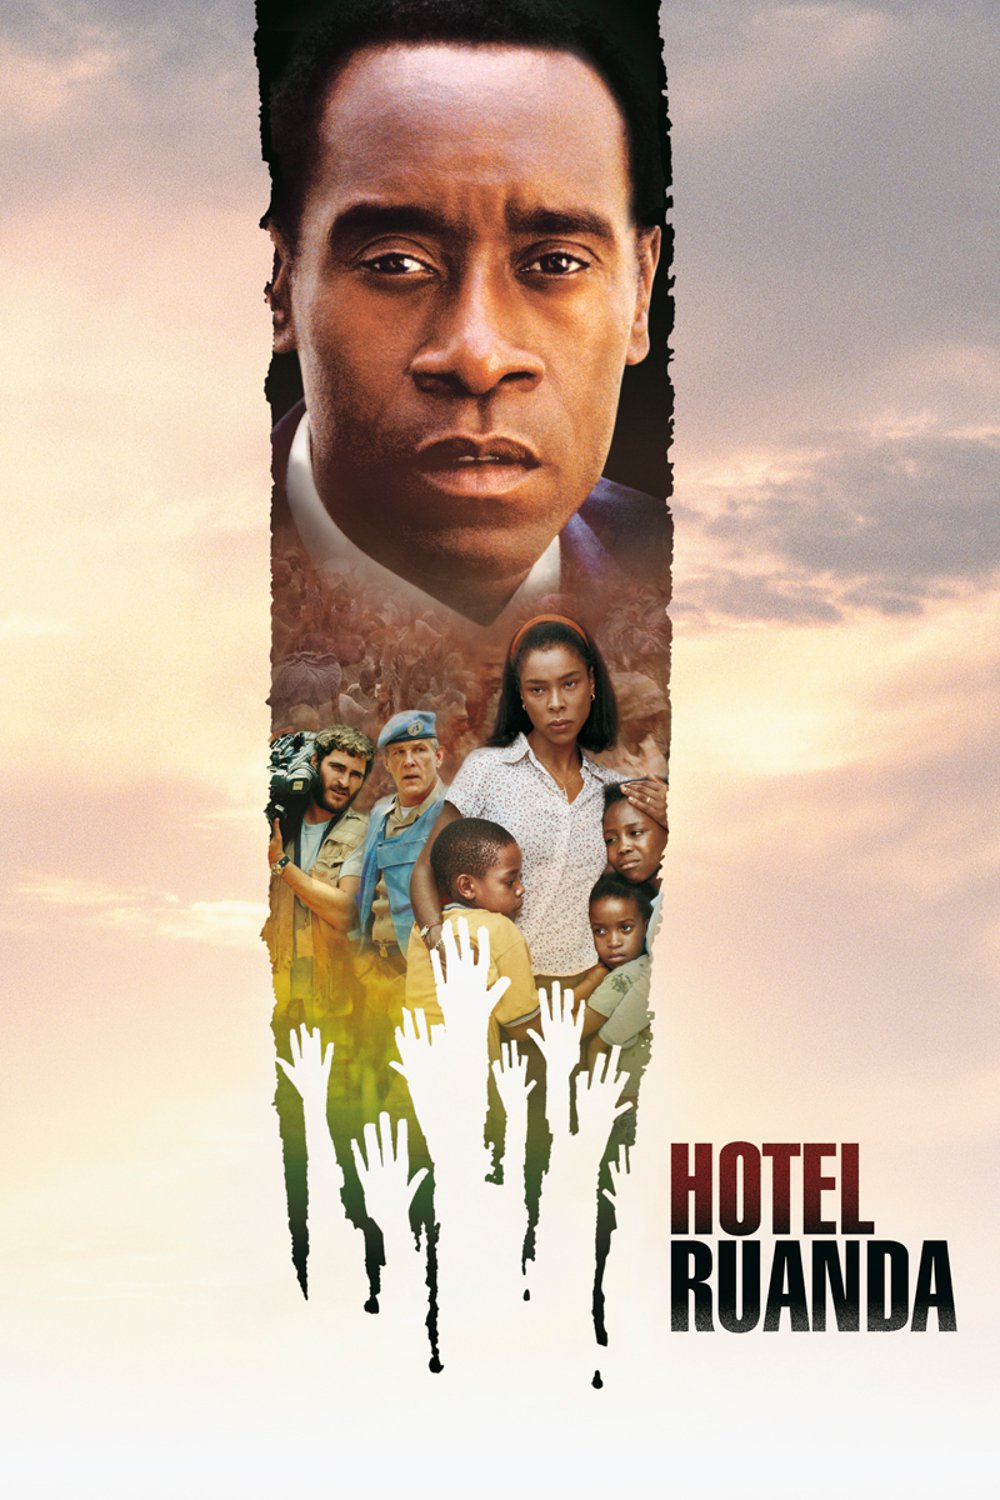 Plakat von "Hotel Ruanda"